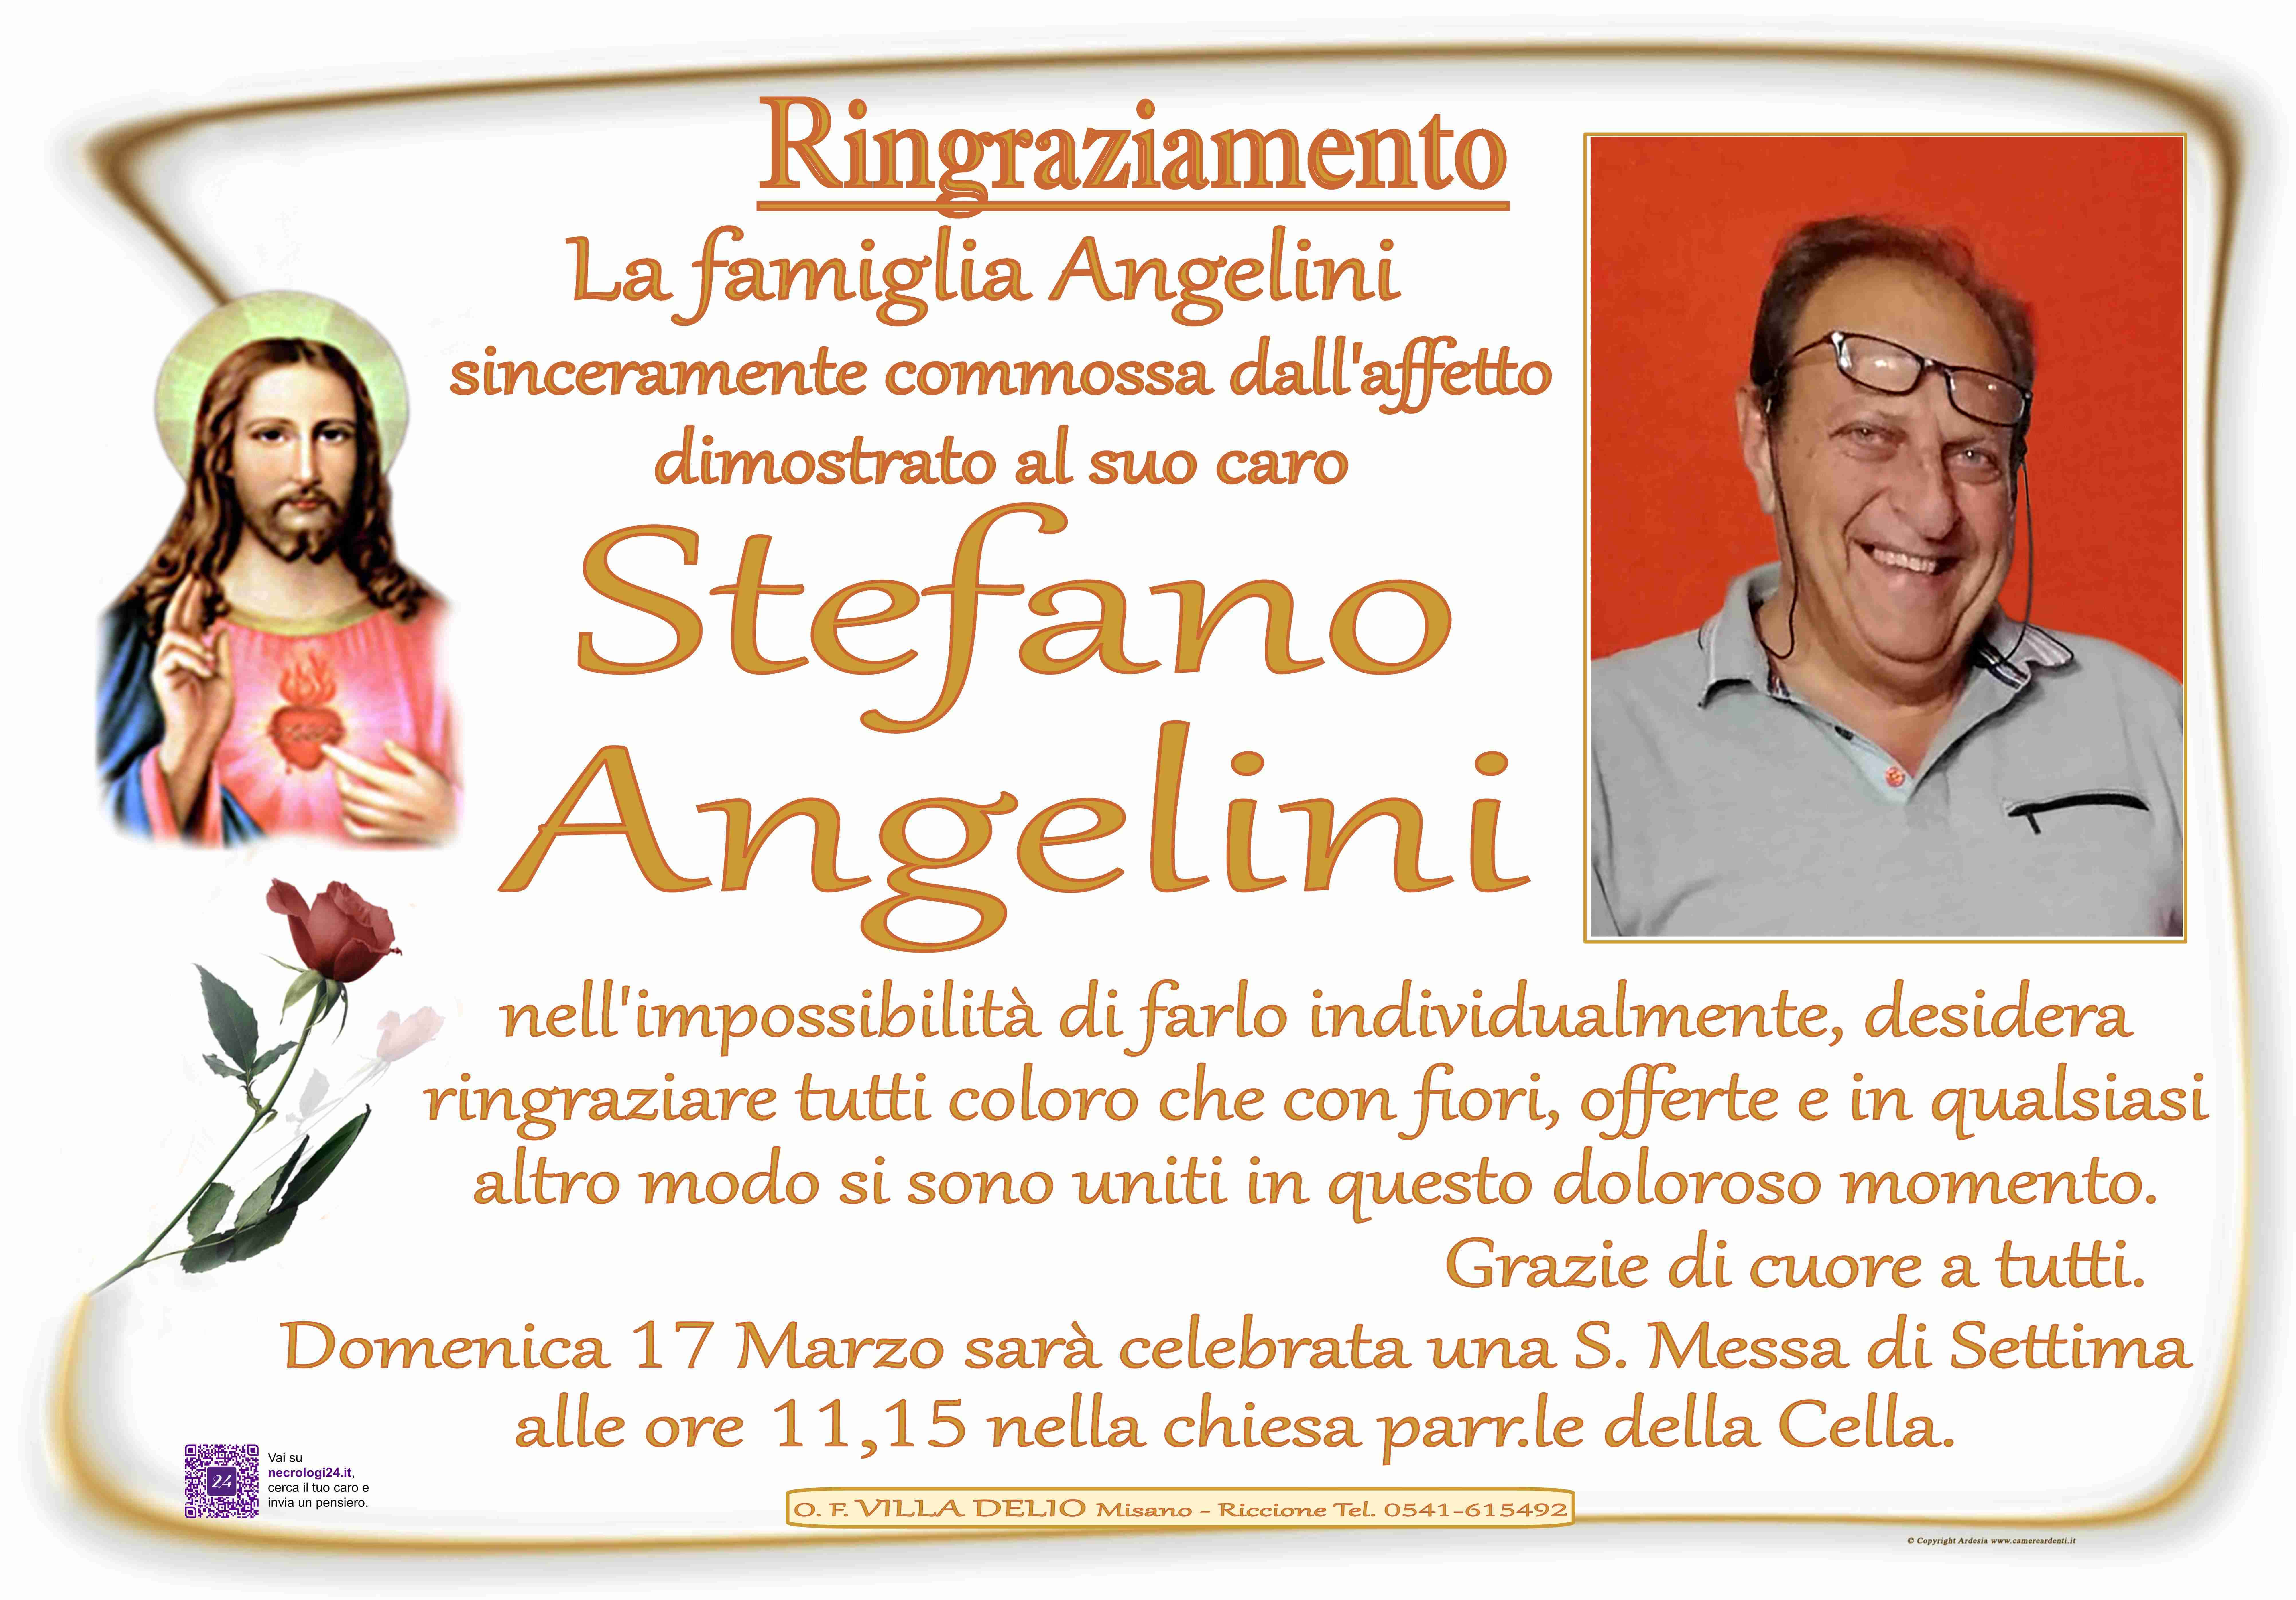 Stefano Angelini